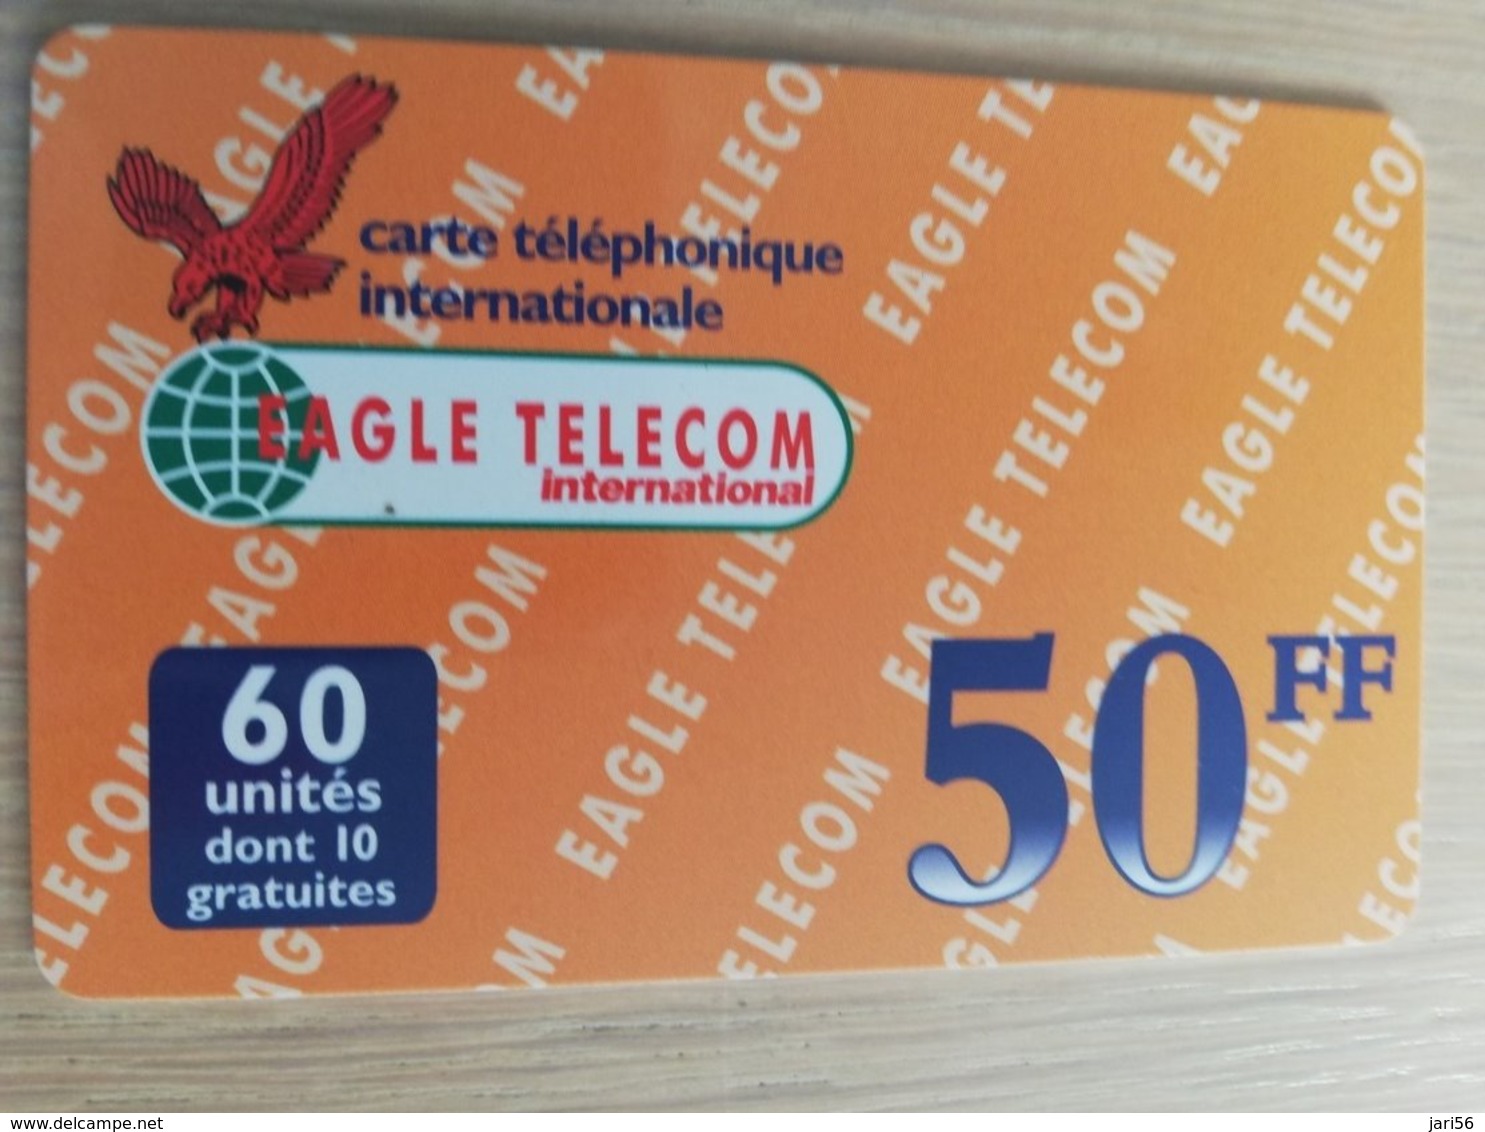 FRANCE/FRANKRIJK  EAGLE TELECOM 50FF  PREPAID  USED    ** 1499** - Nachladekarten (Handy/SIM)